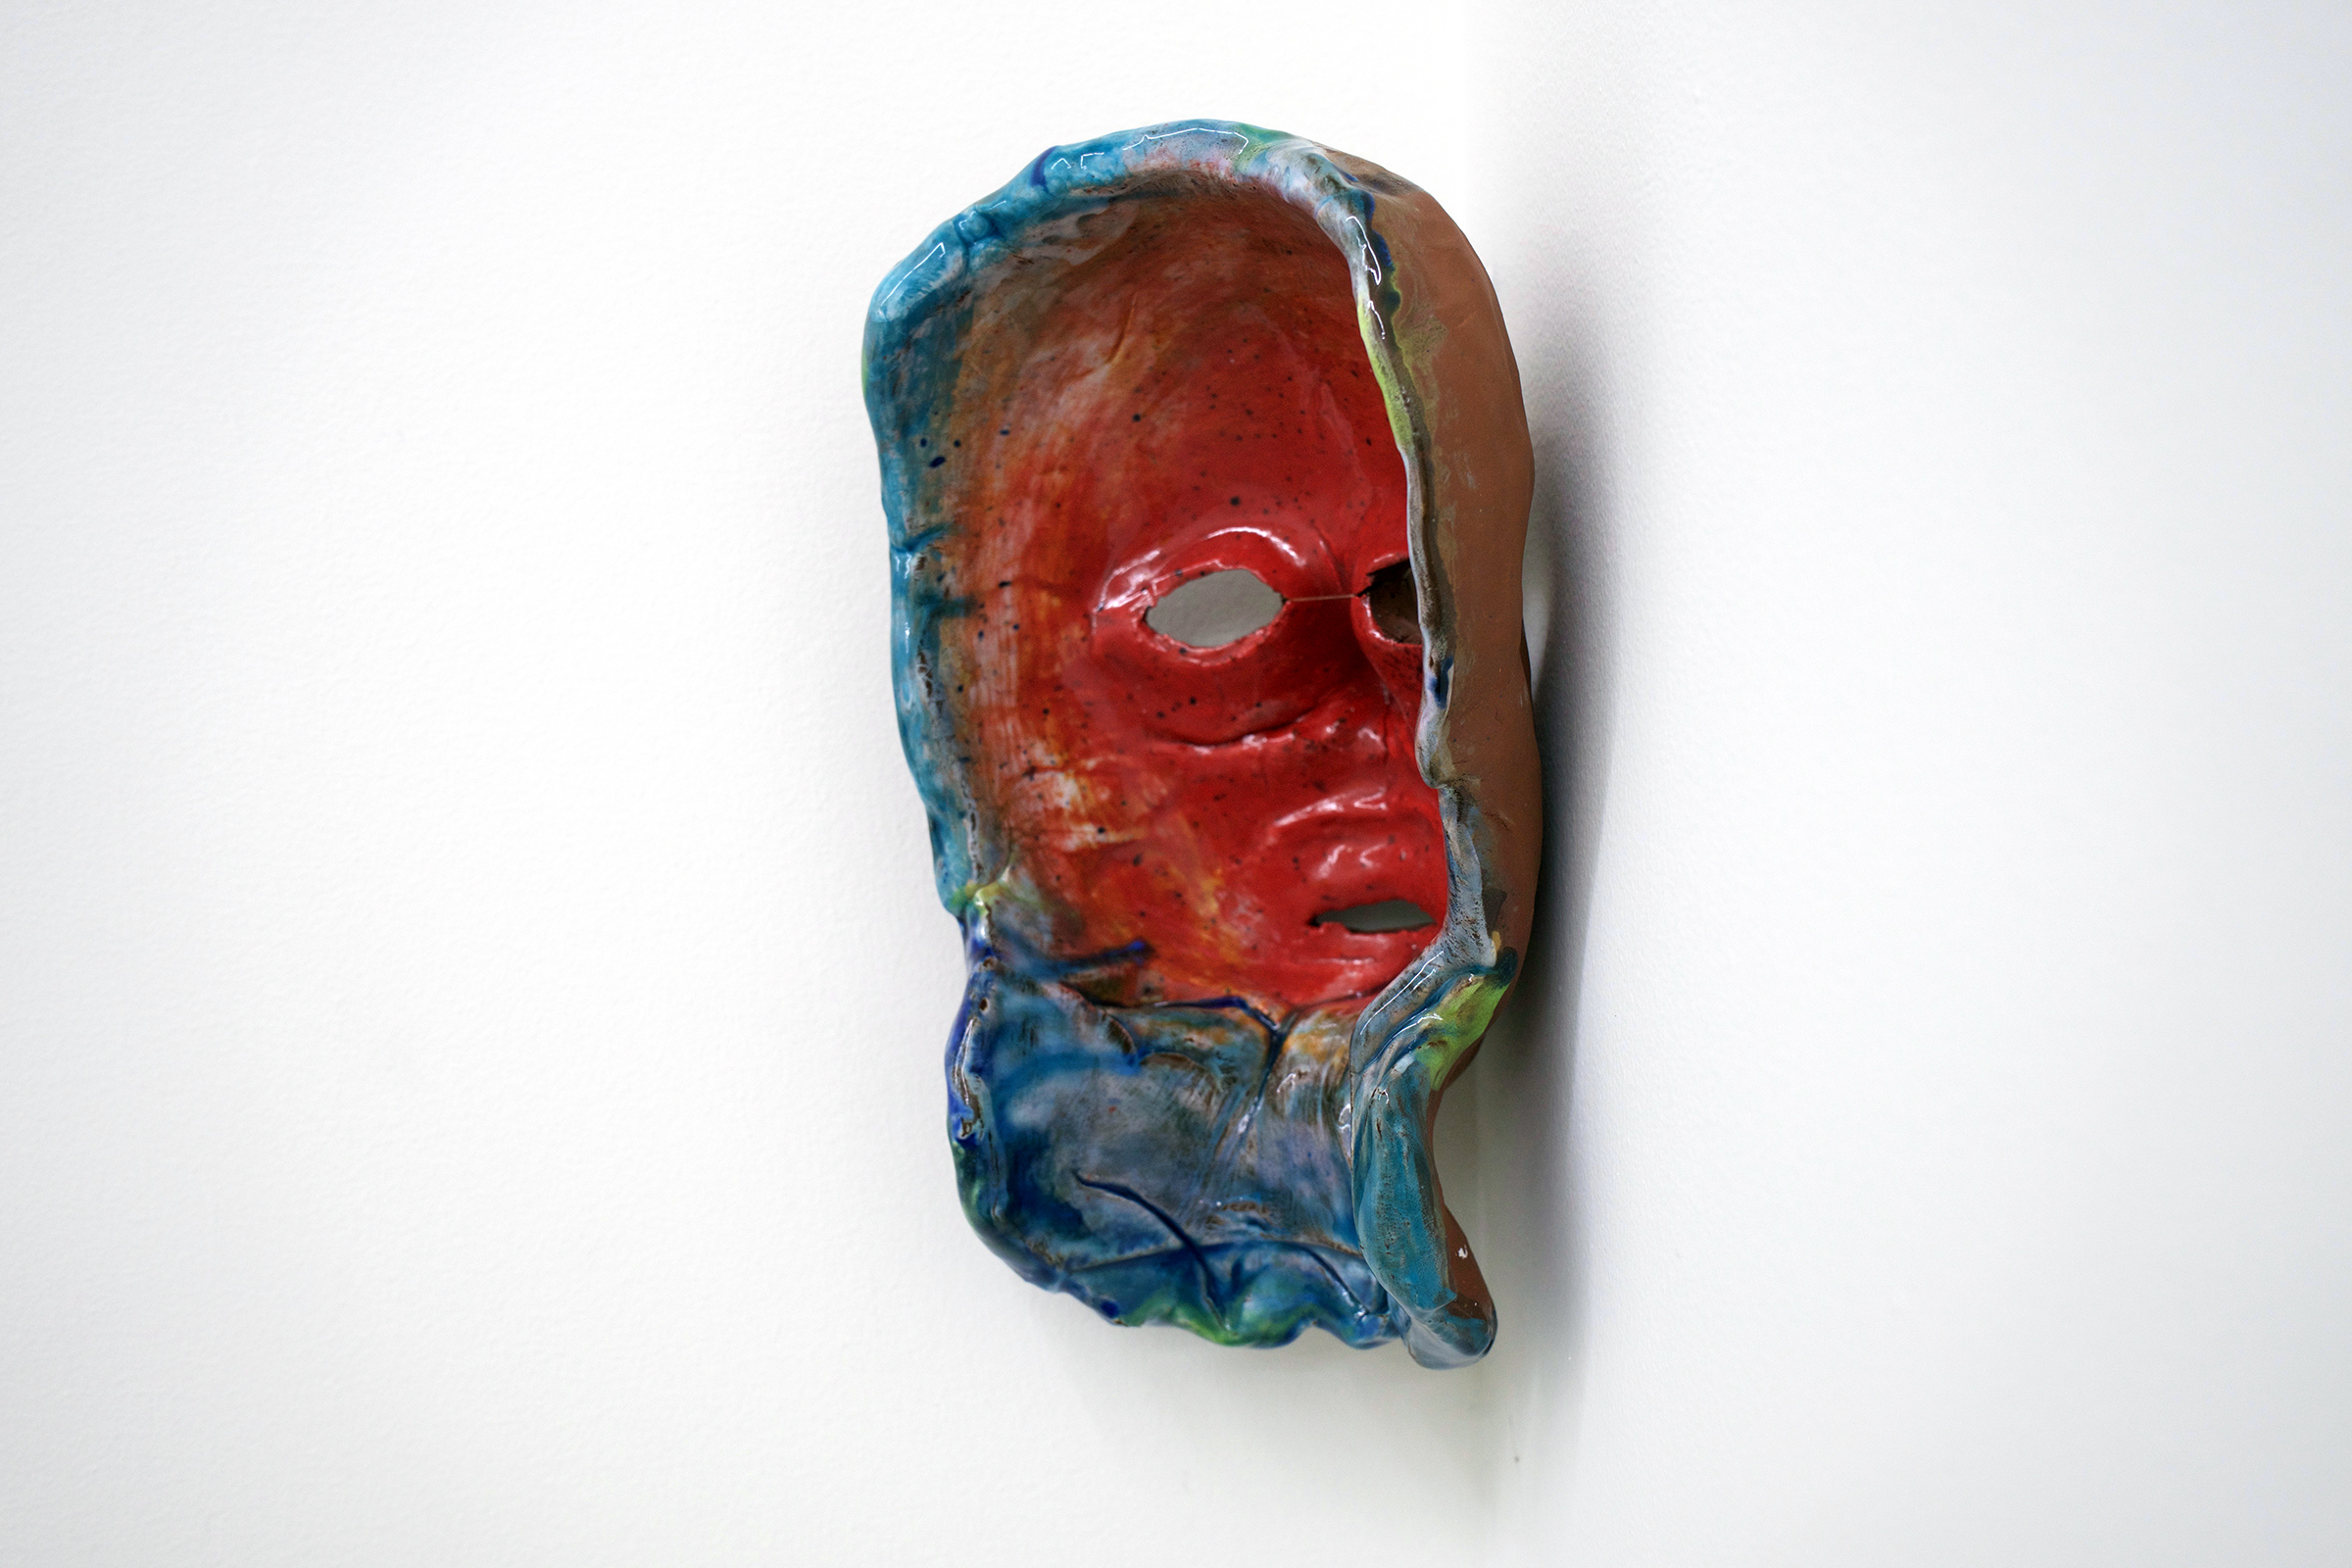   CHRIS DUNCAN  (3/4 view)&nbsp; Mask #1 , 2017, ceramic and glaze, 9 1/4" x 6" x 6" 